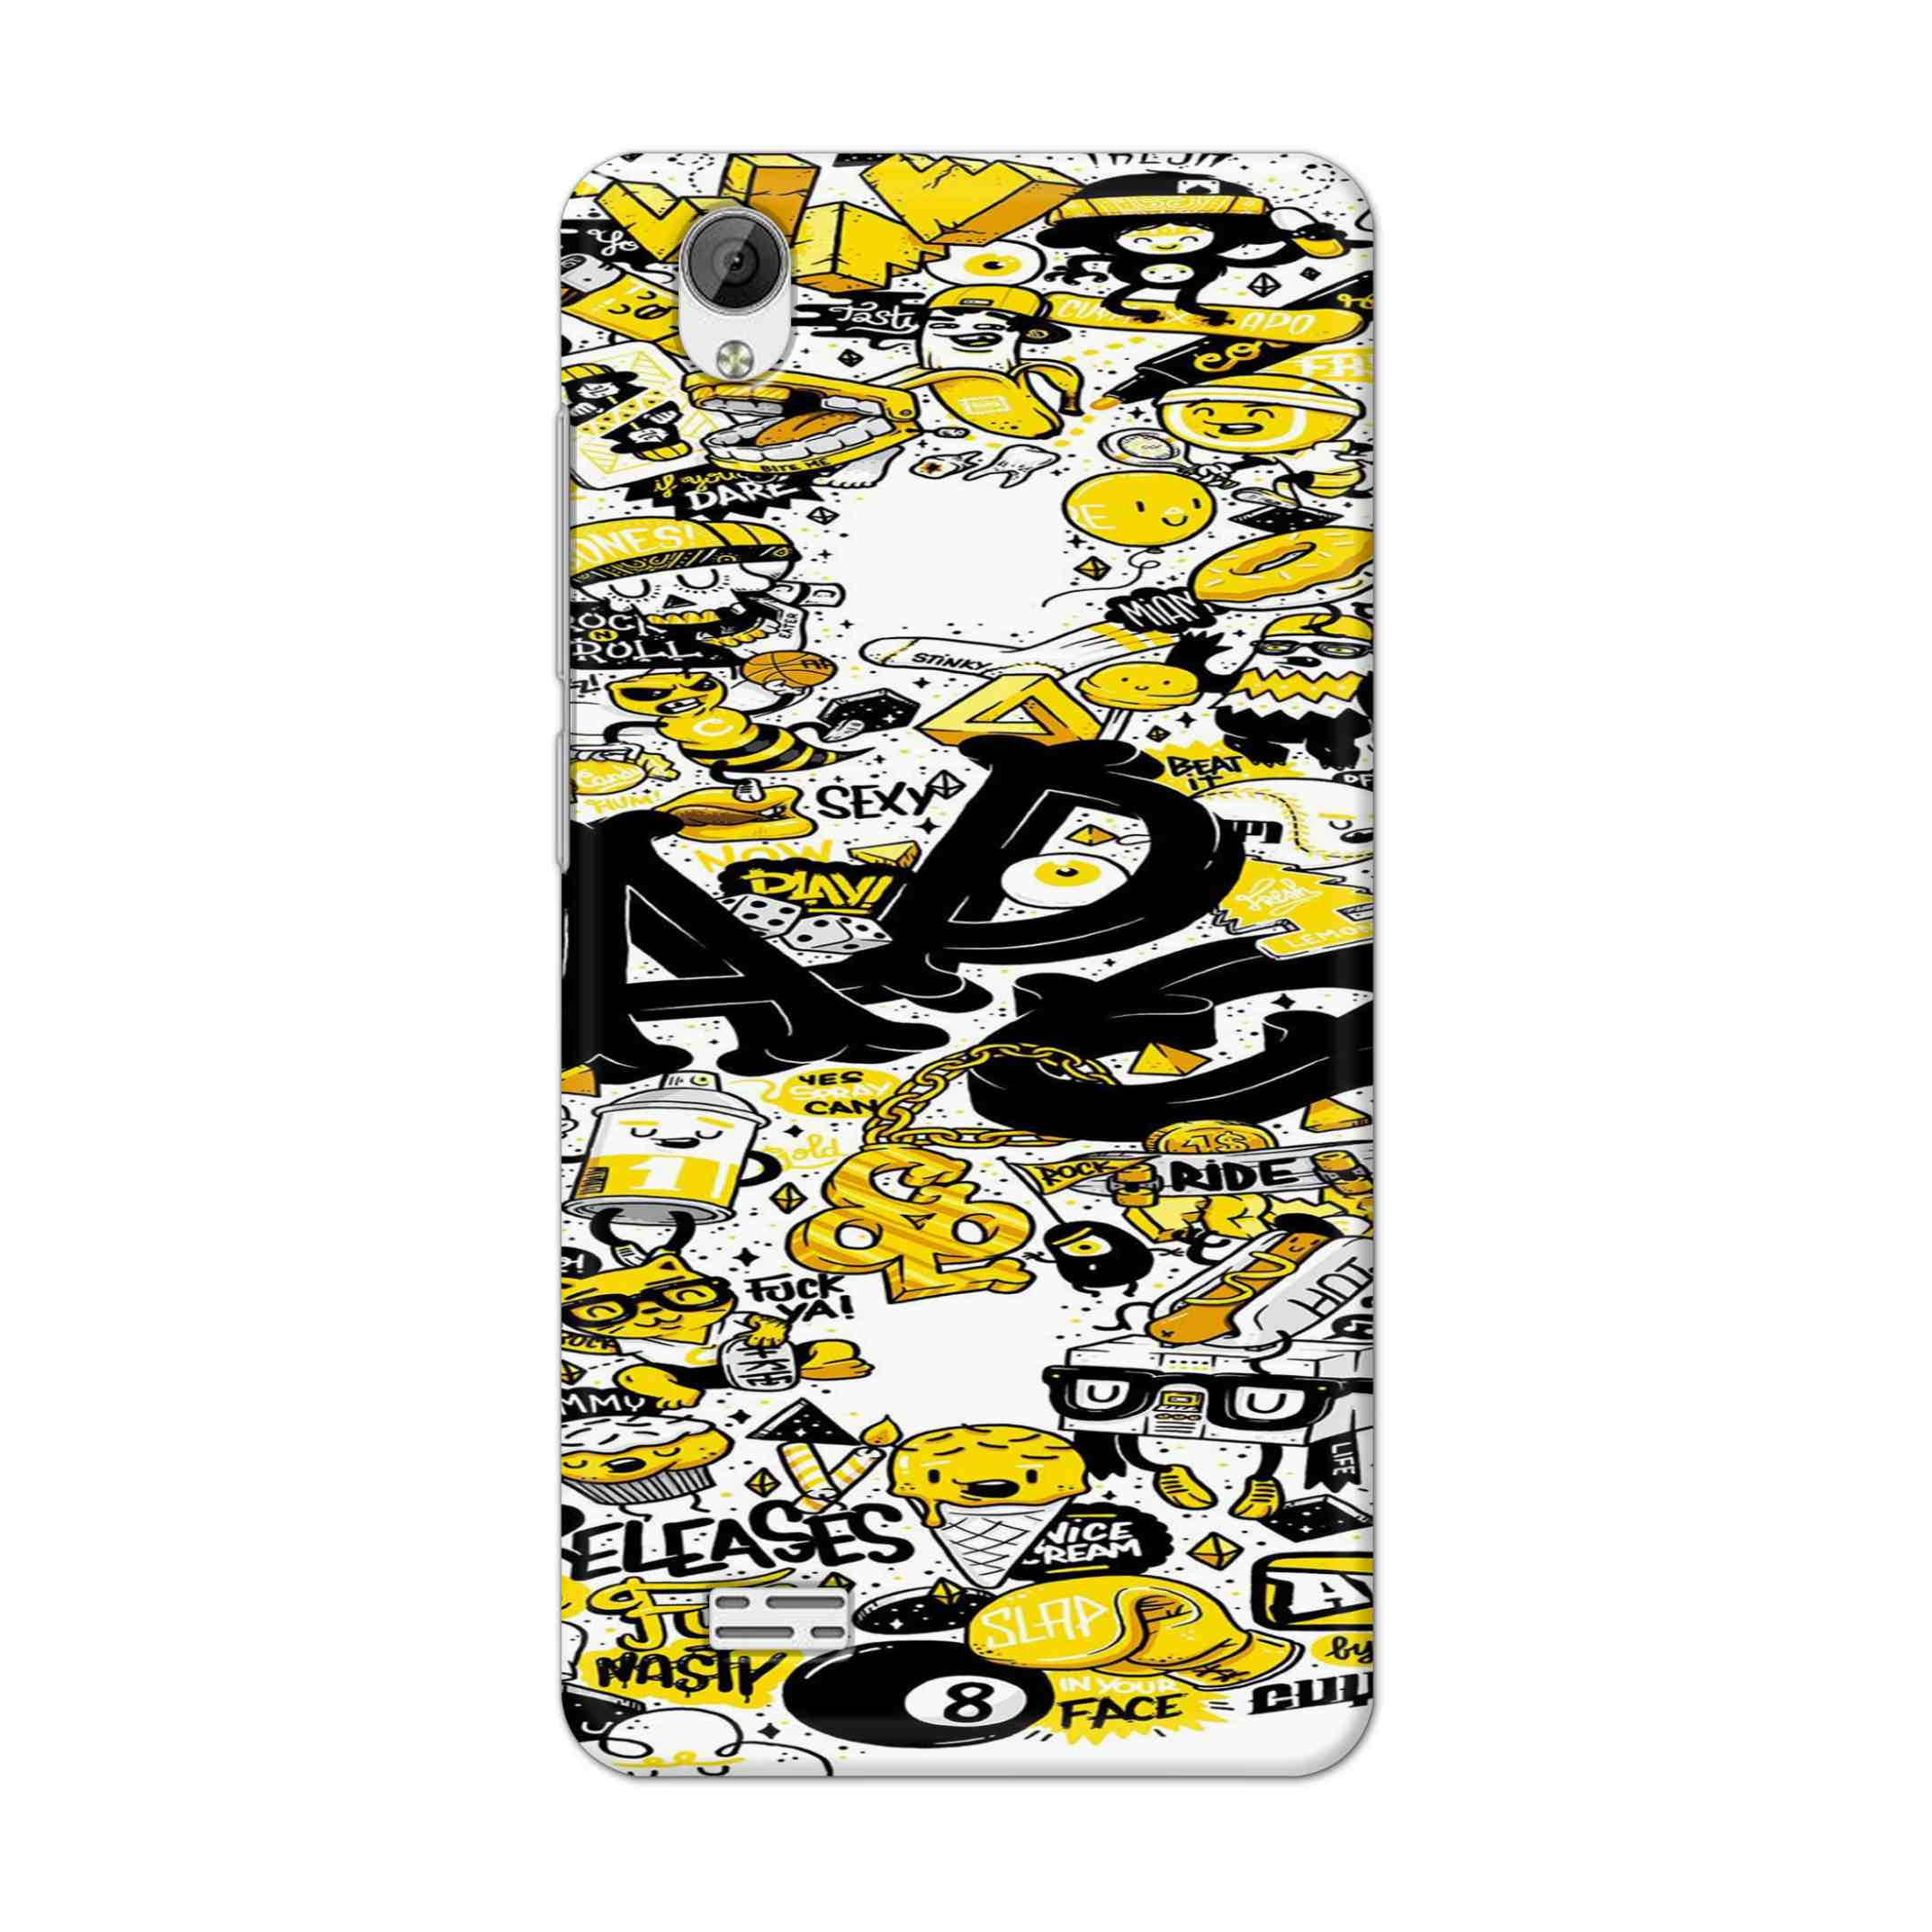 Buy Ado Hard Back Mobile Phone Case Cover For Vivo Y31 Online